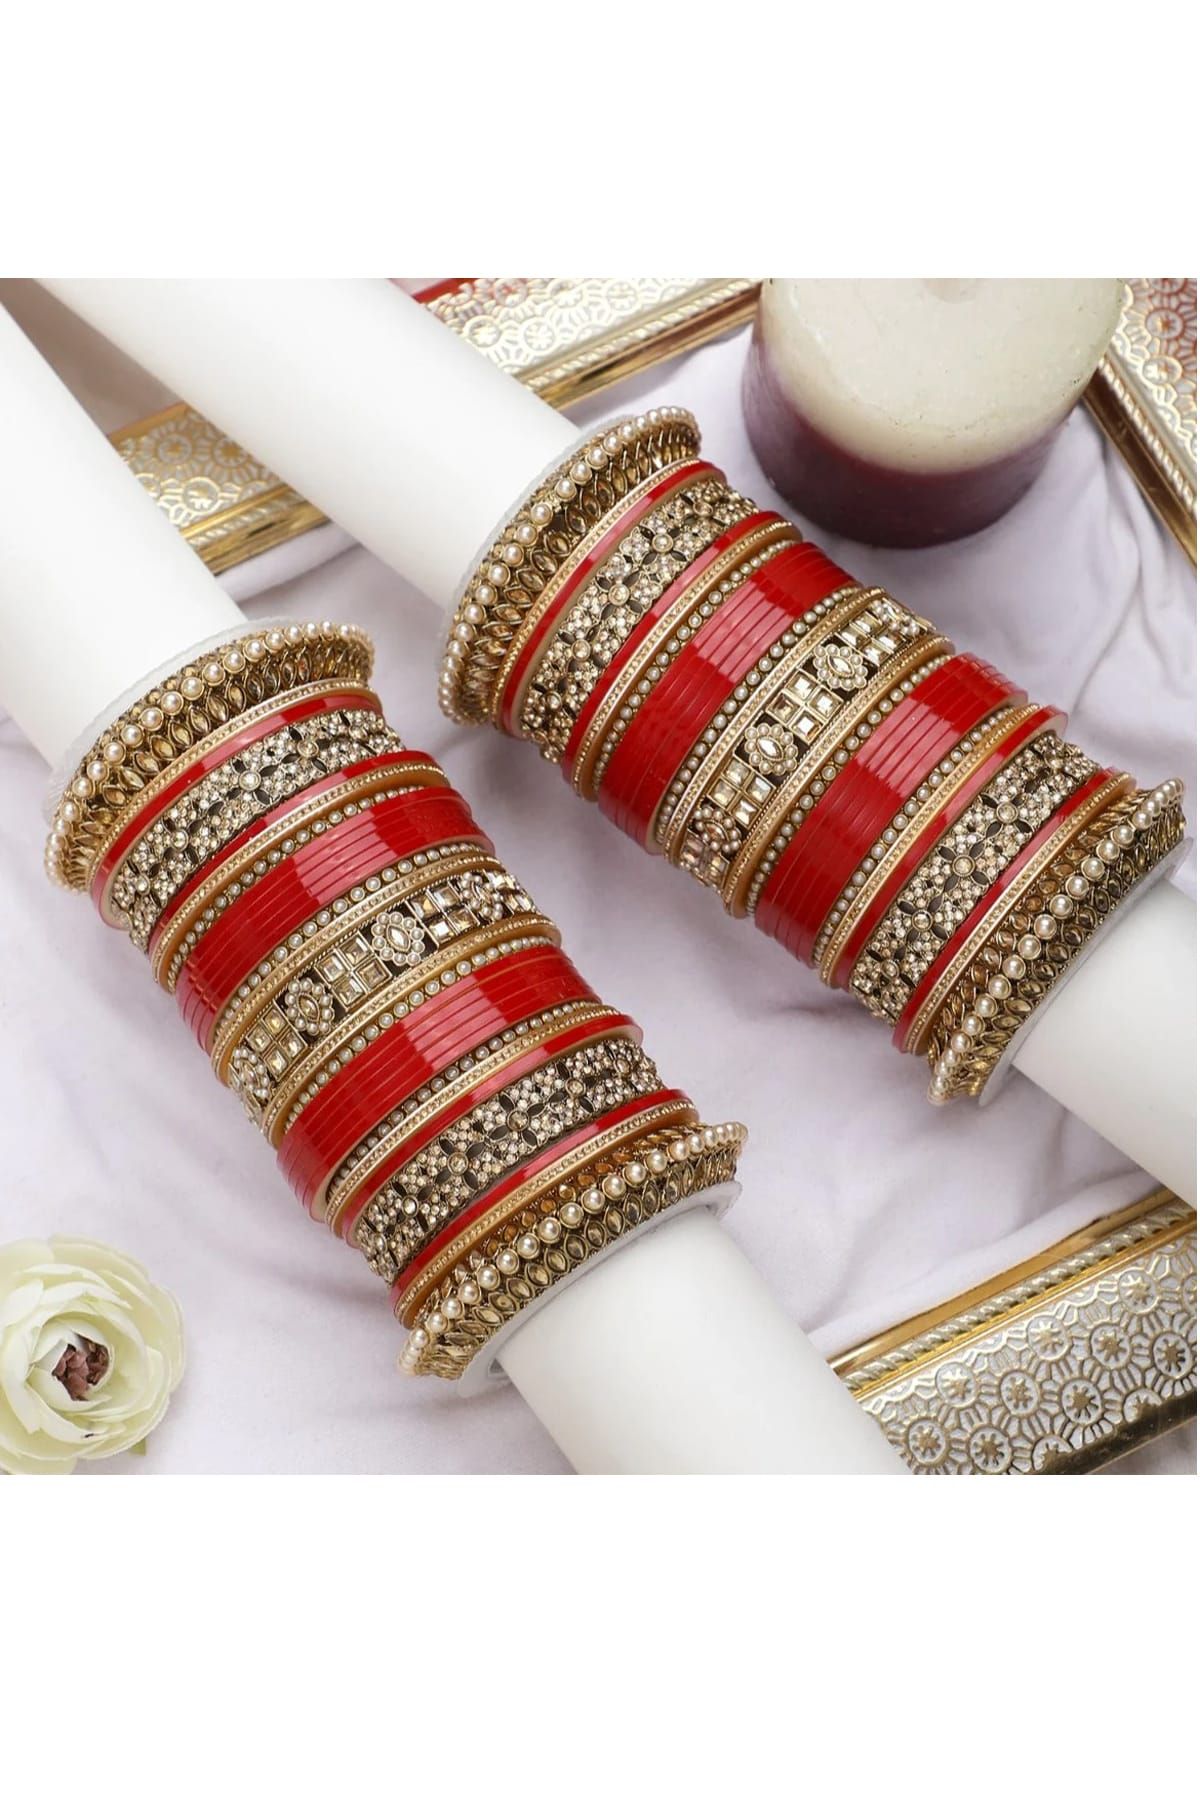 Wedding Lehenga Matching Bangles at Rs 1800/set | दुल्हन का चूड़ा in  Lucknow | ID: 19704038473